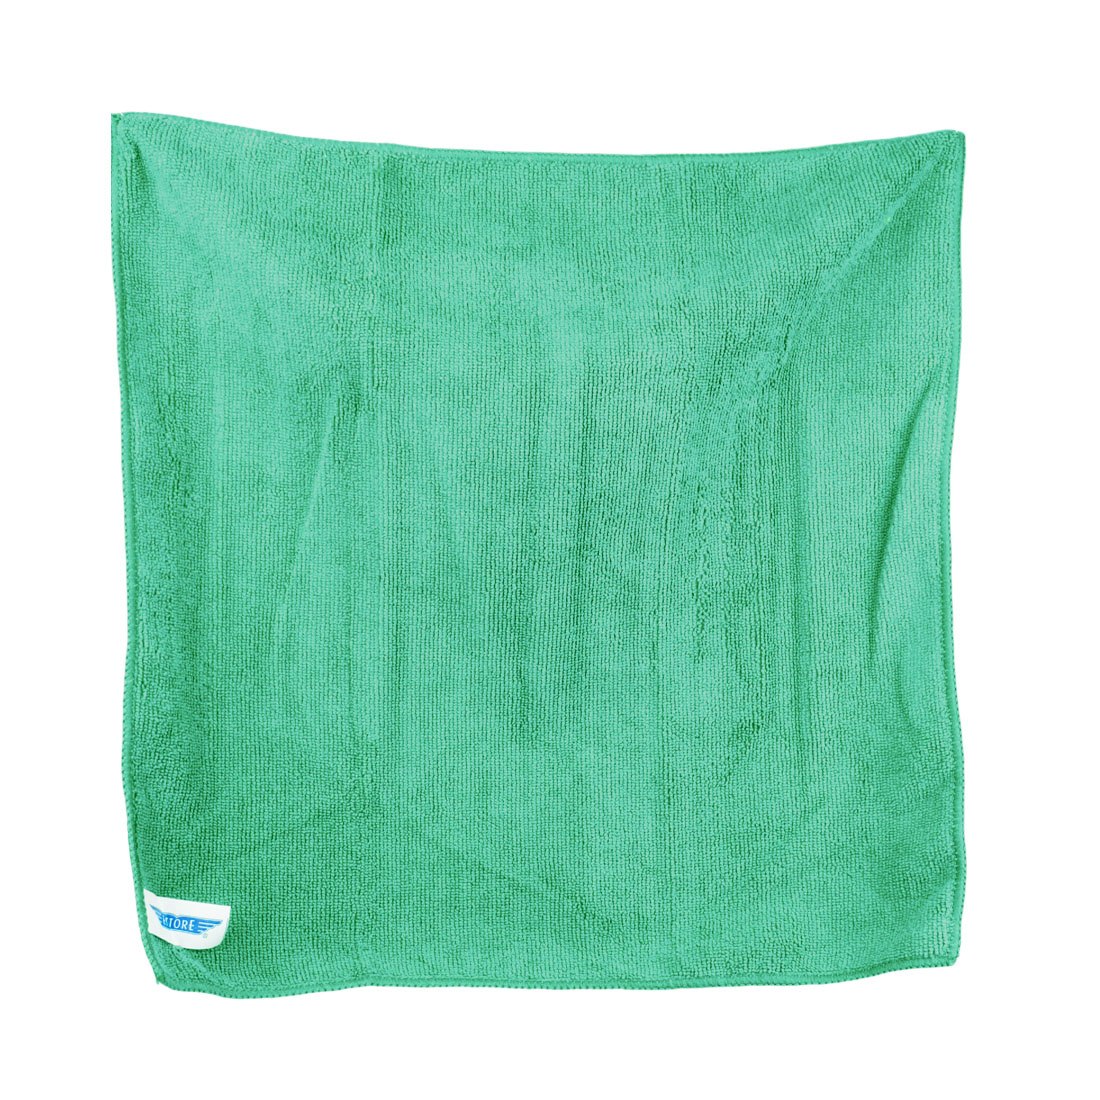 Ettore MicroSwipe Towel Green 10 Pack Full View